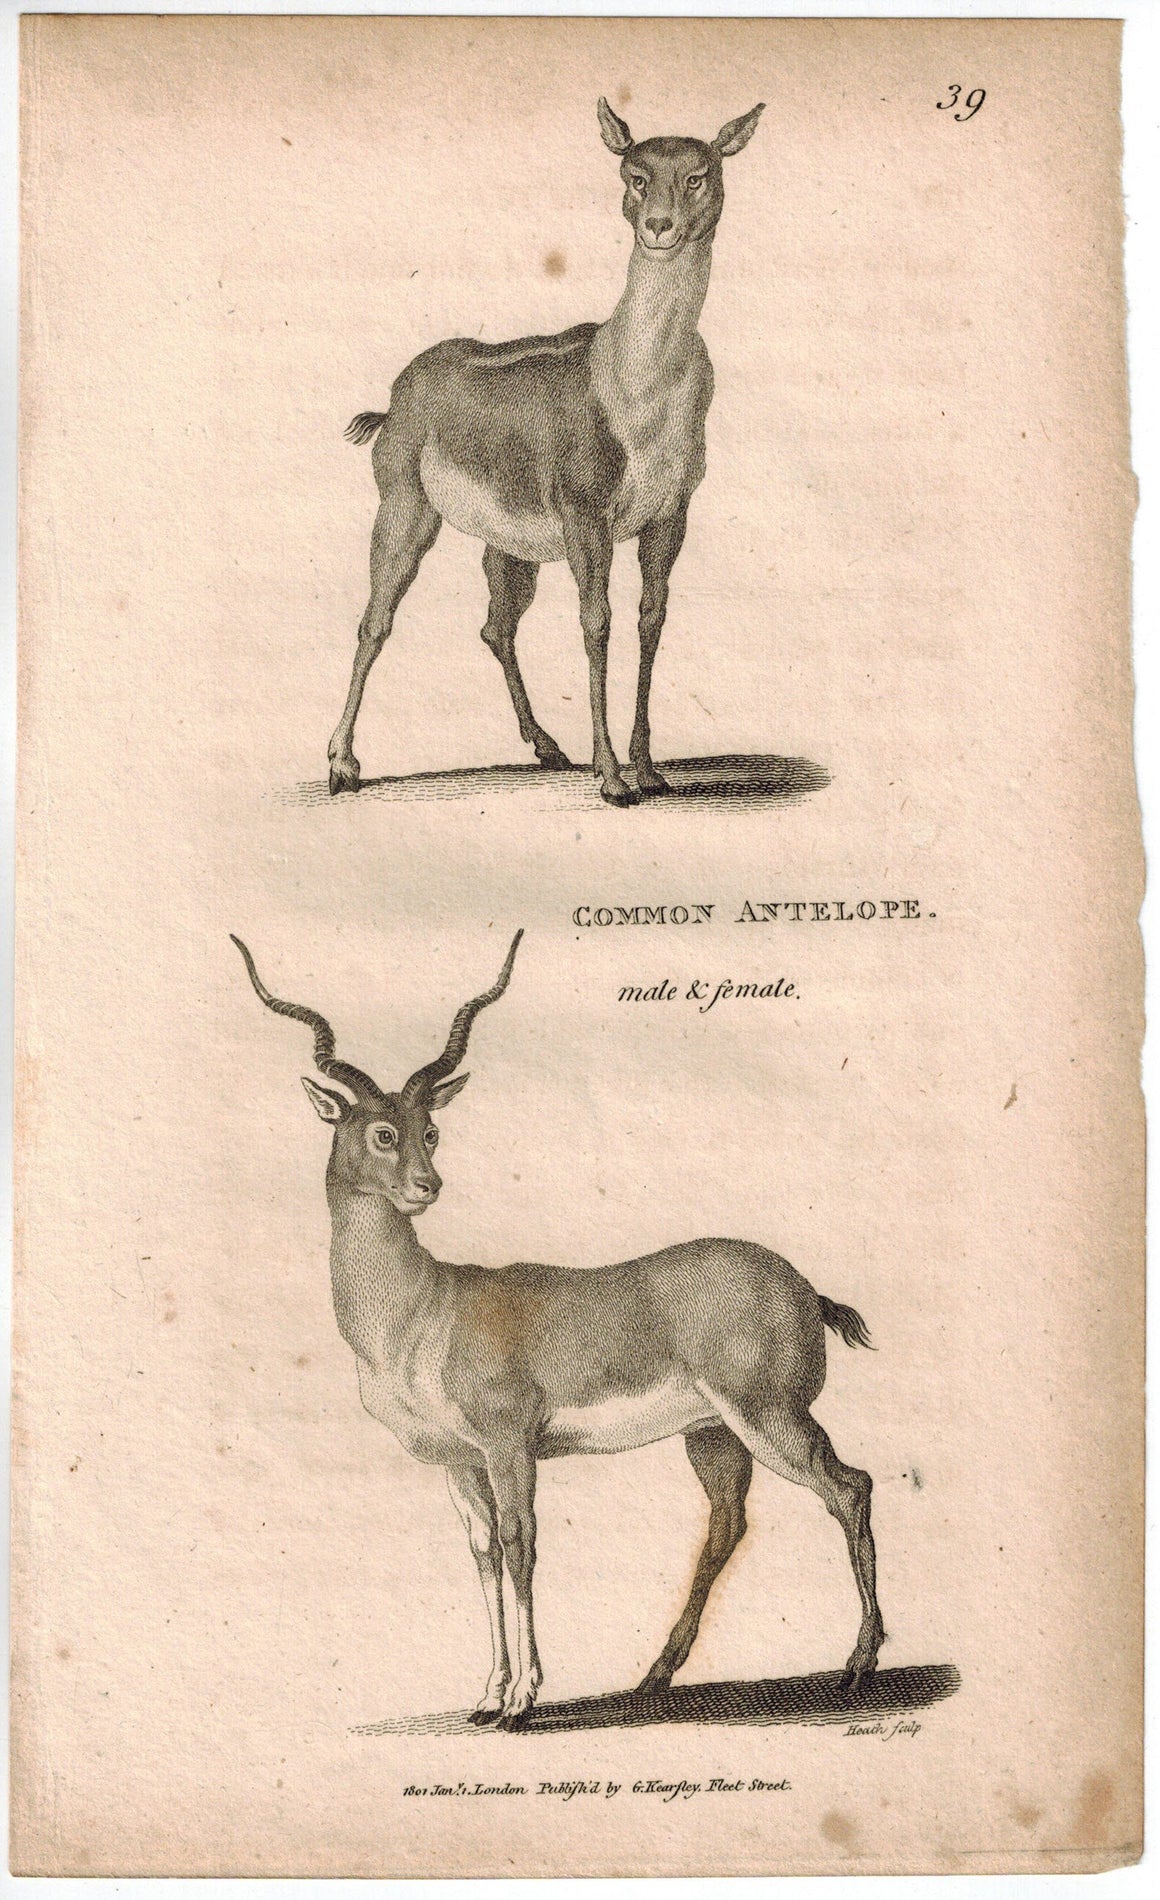 Common Antelope Print 1809 George Shaw Original Engraving